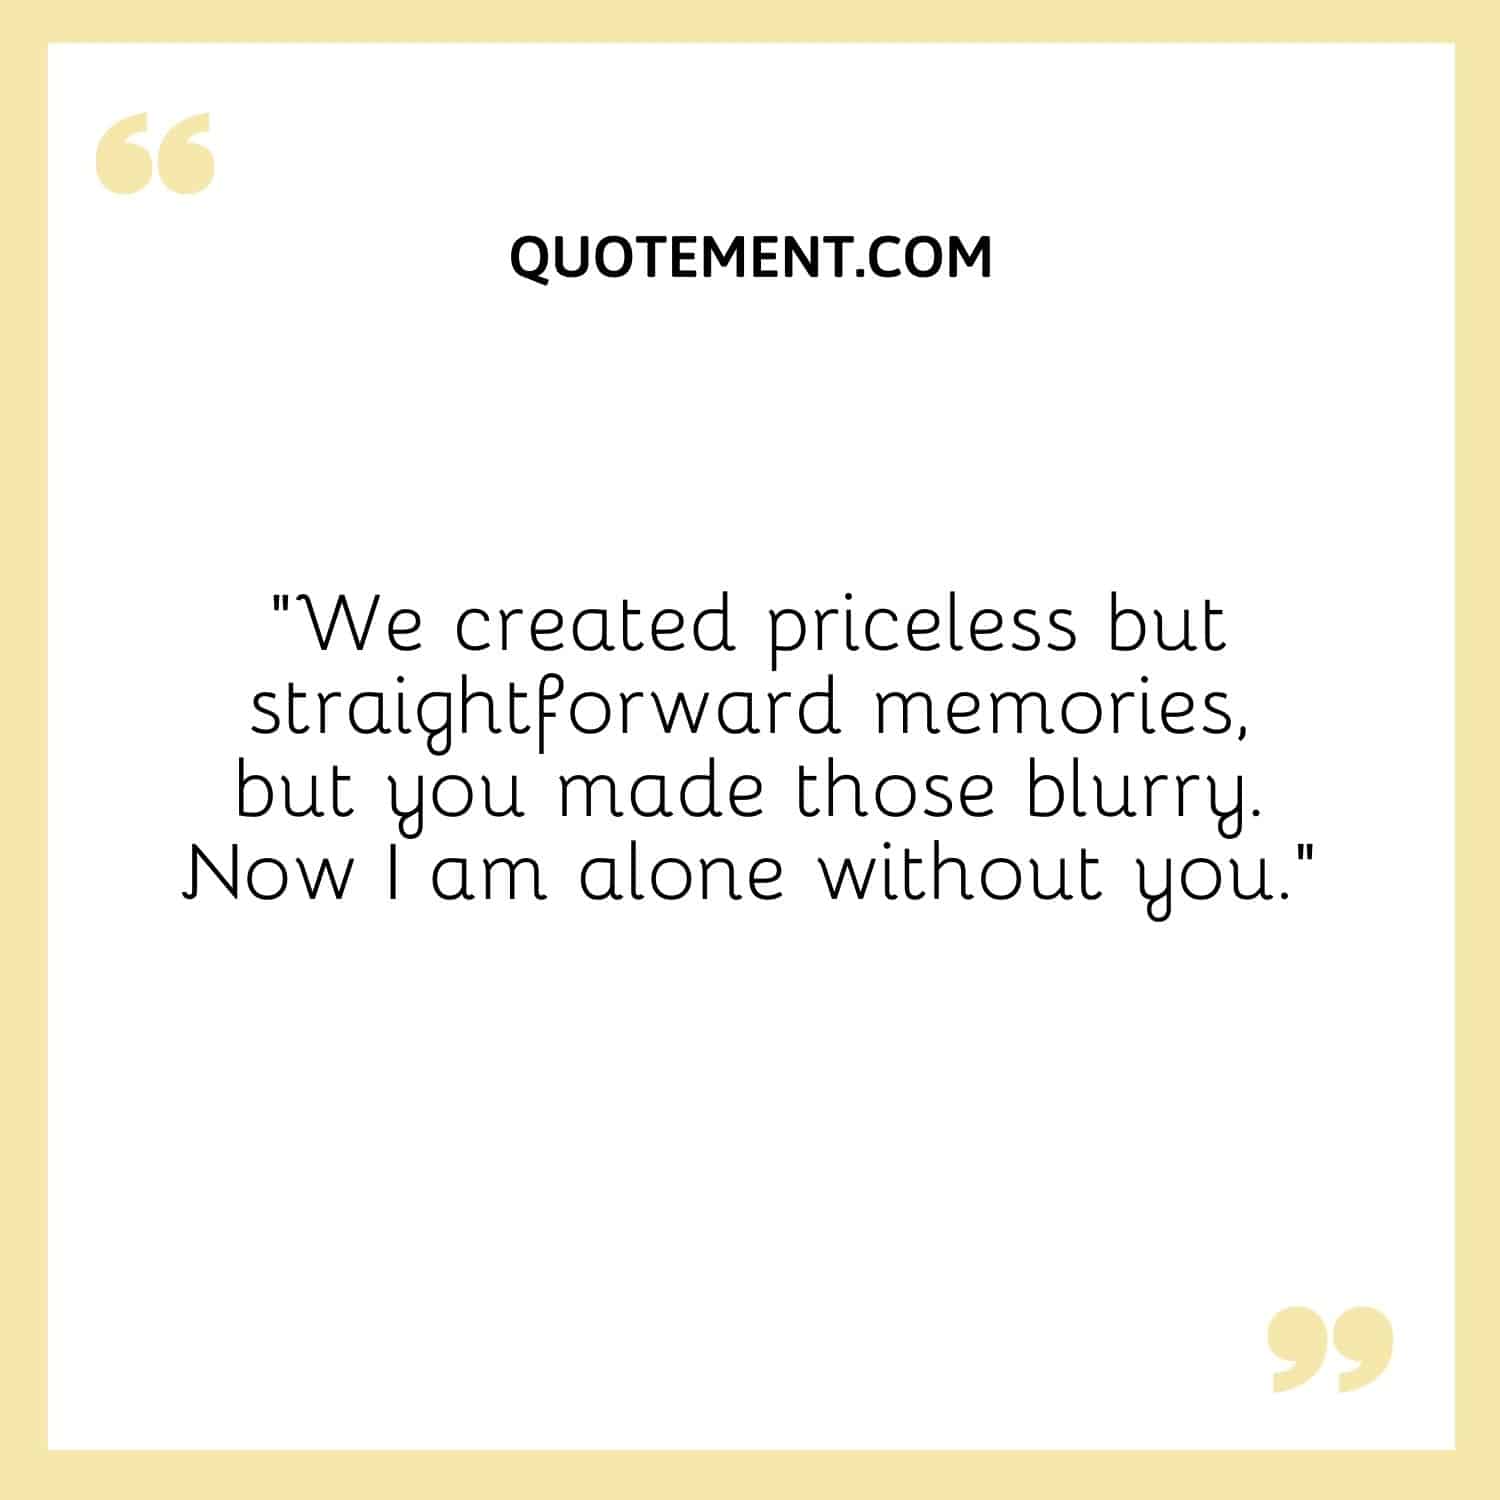 We created priceless but straightforward memories